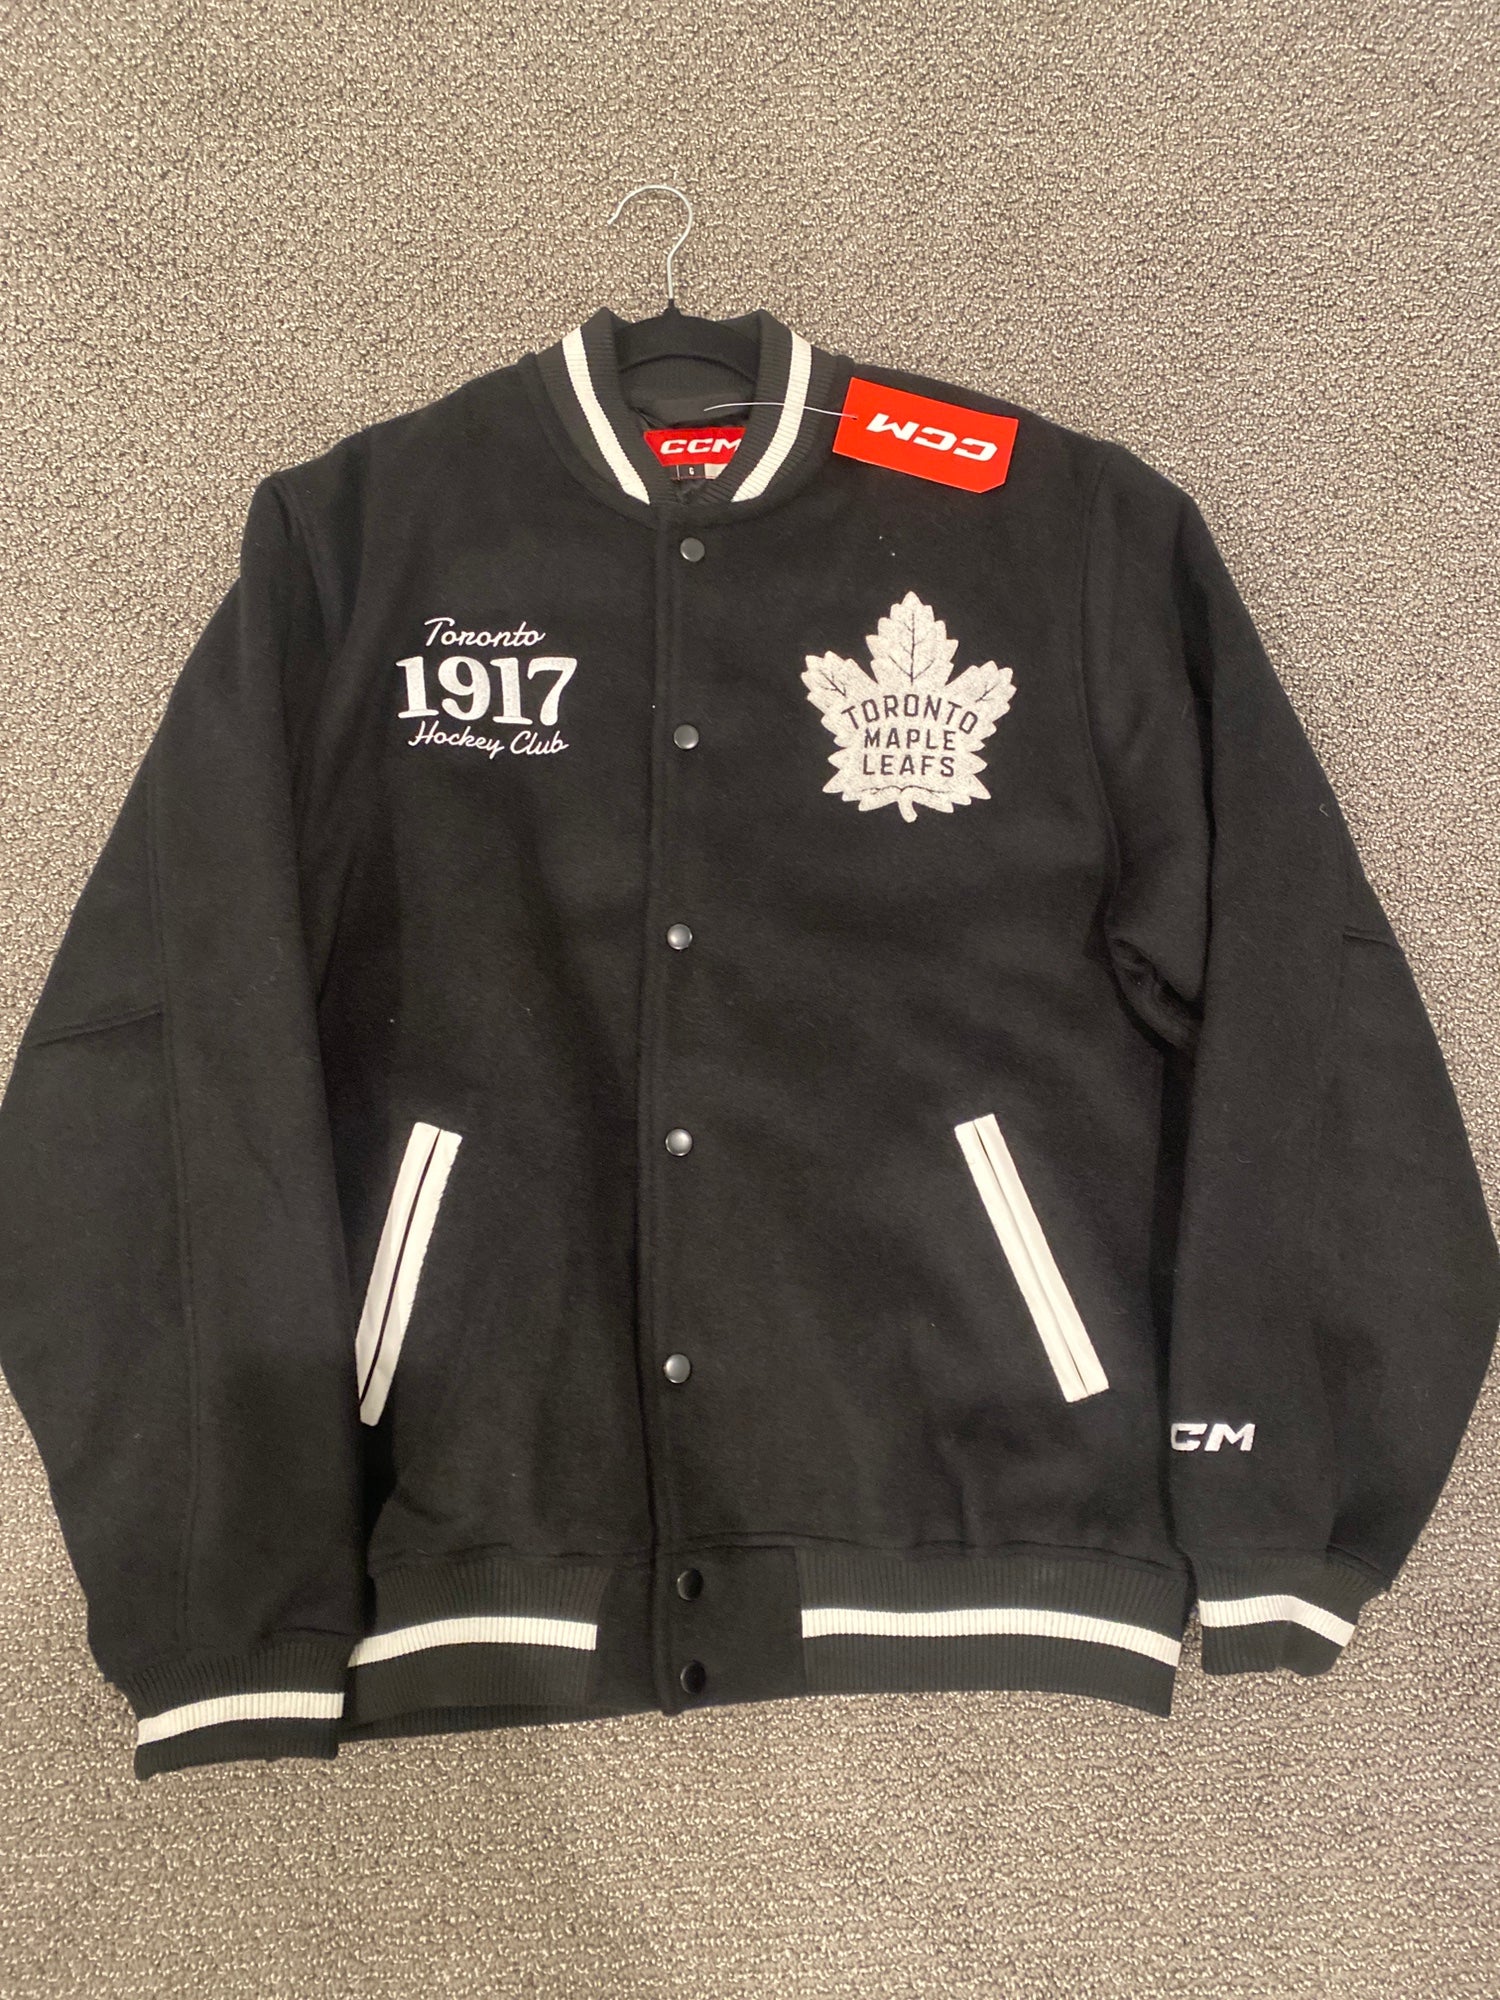 Vintage Toronto Maple Leafs Jacket size Small Snap Up Hockey Coat